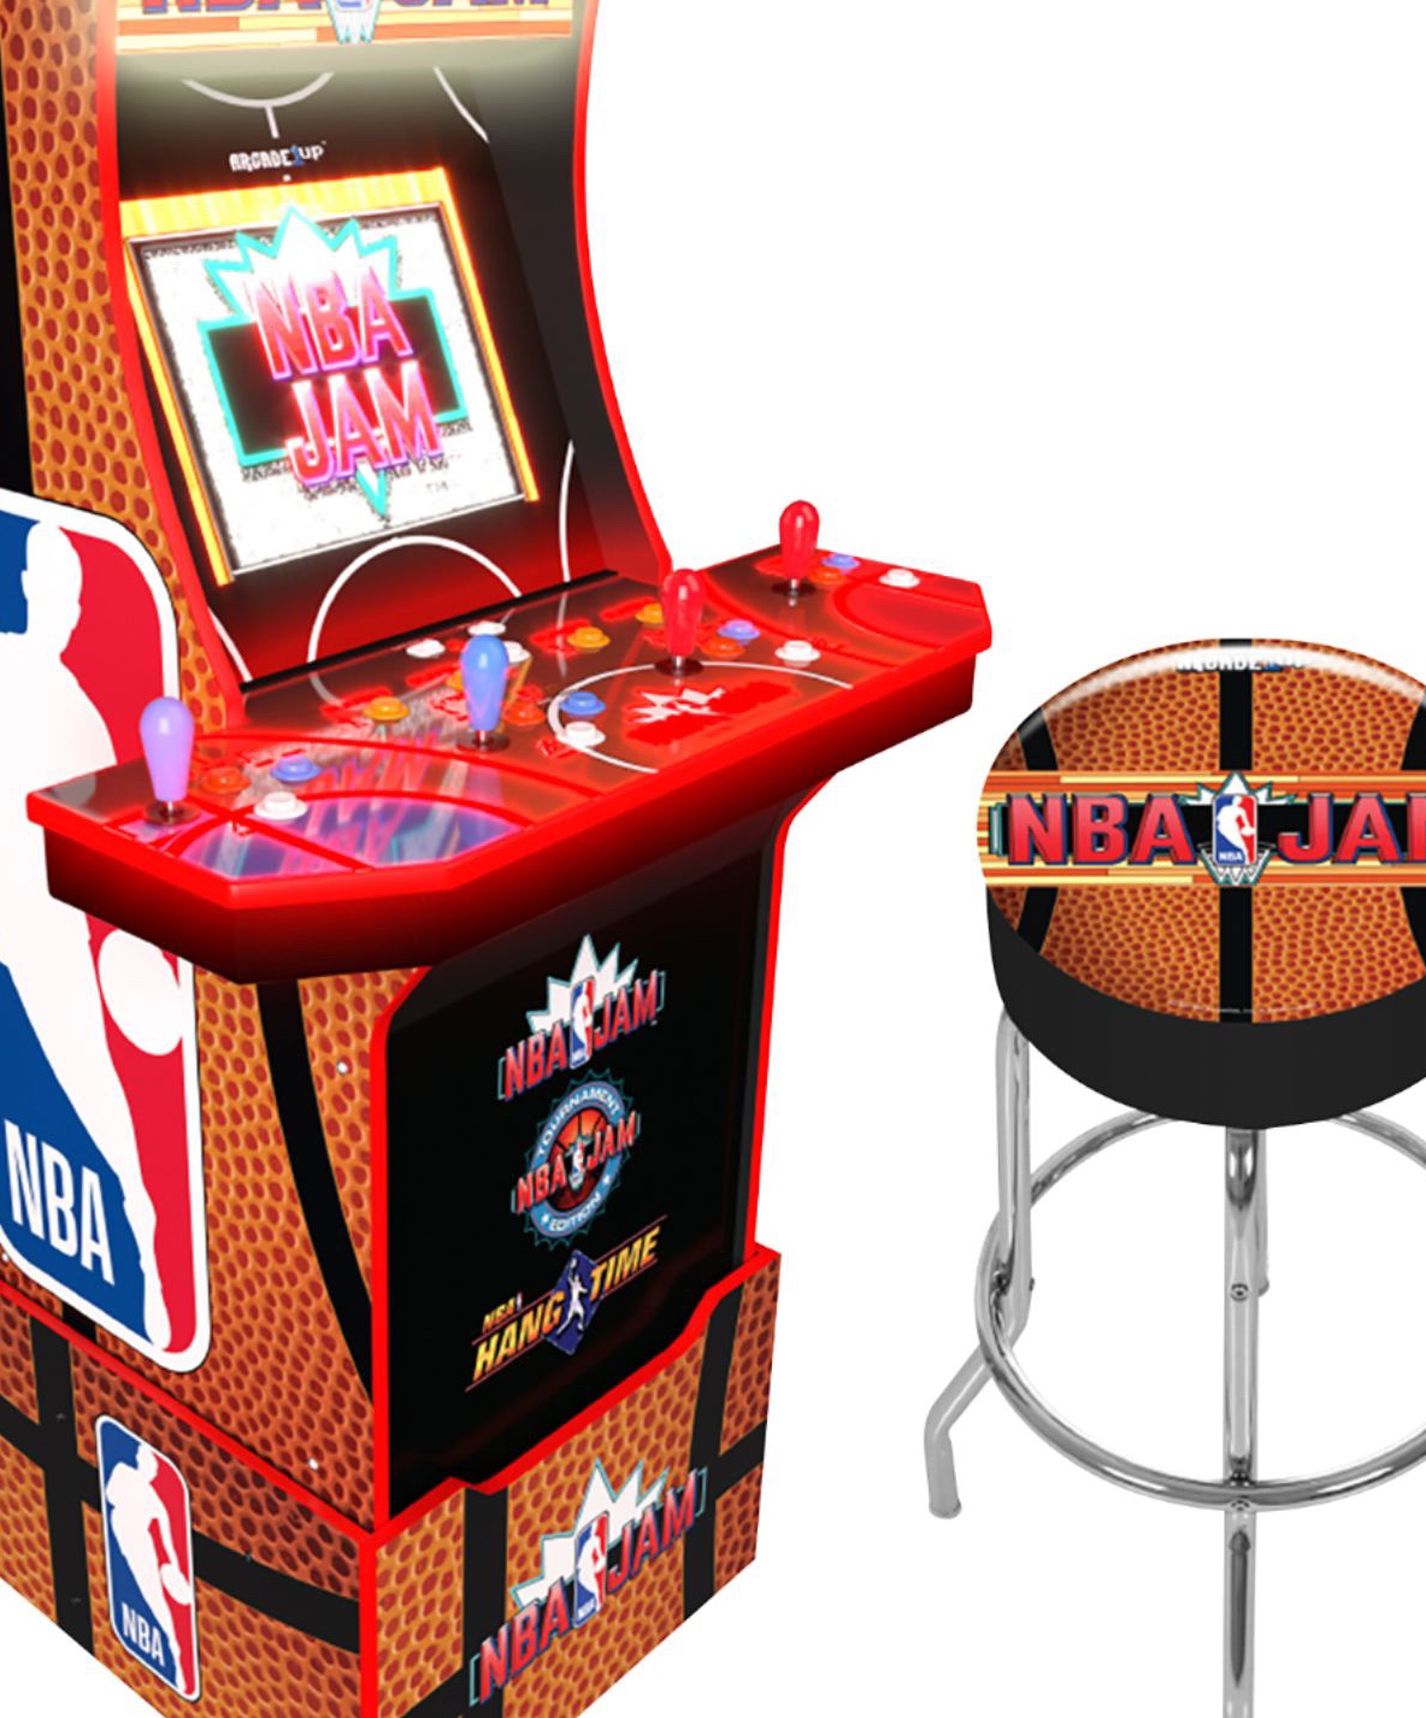 NBA jam Arcade